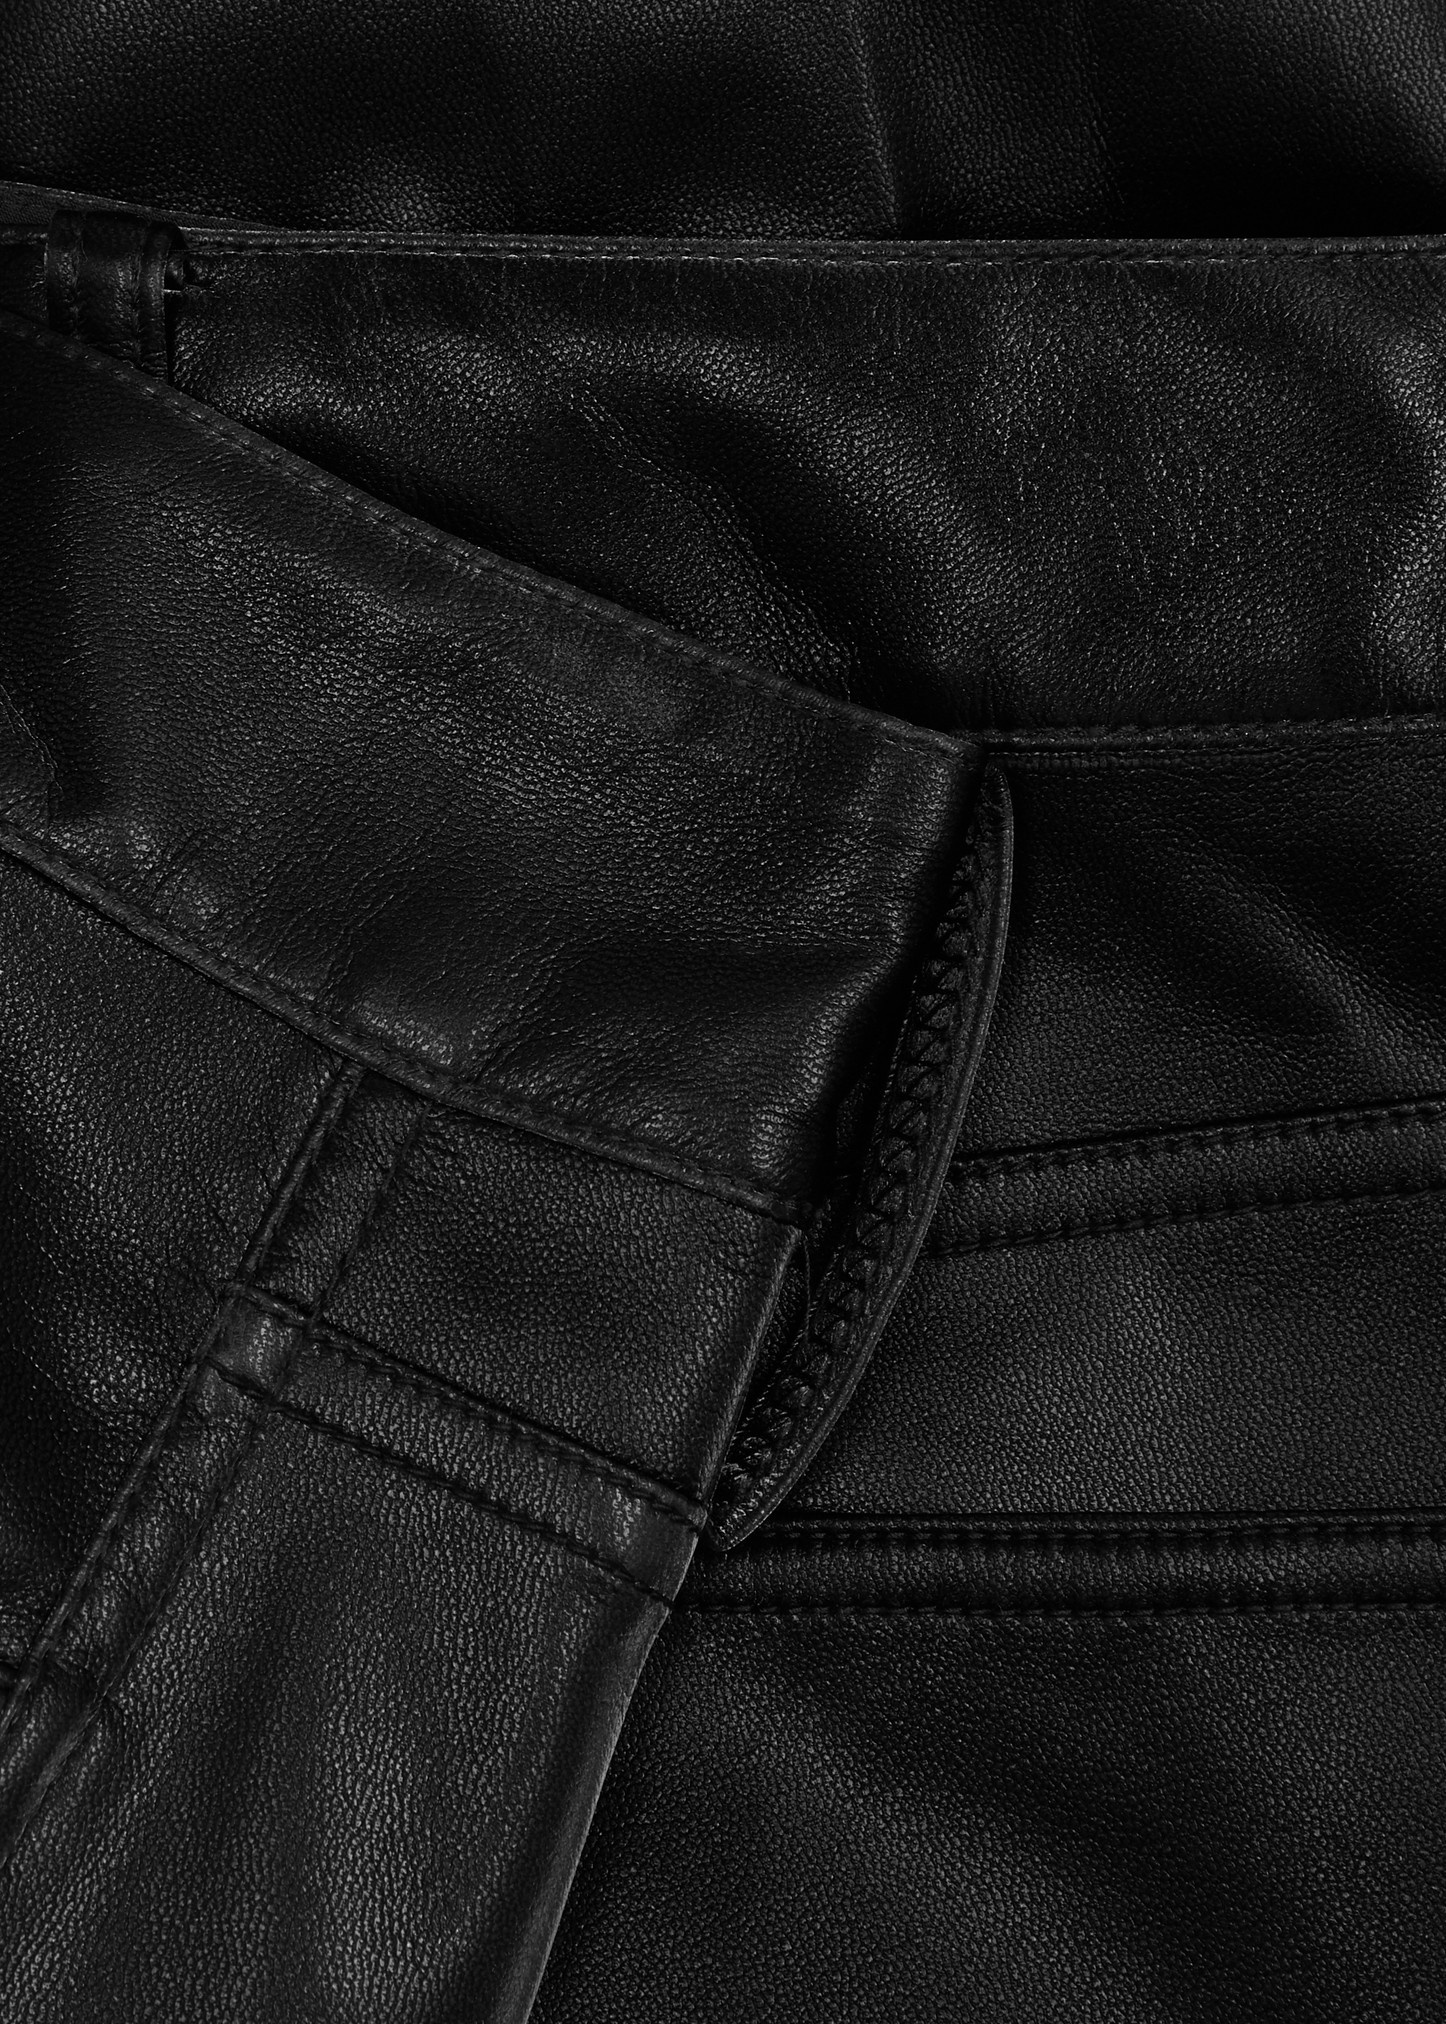 Trish vegan leather trousers - 5